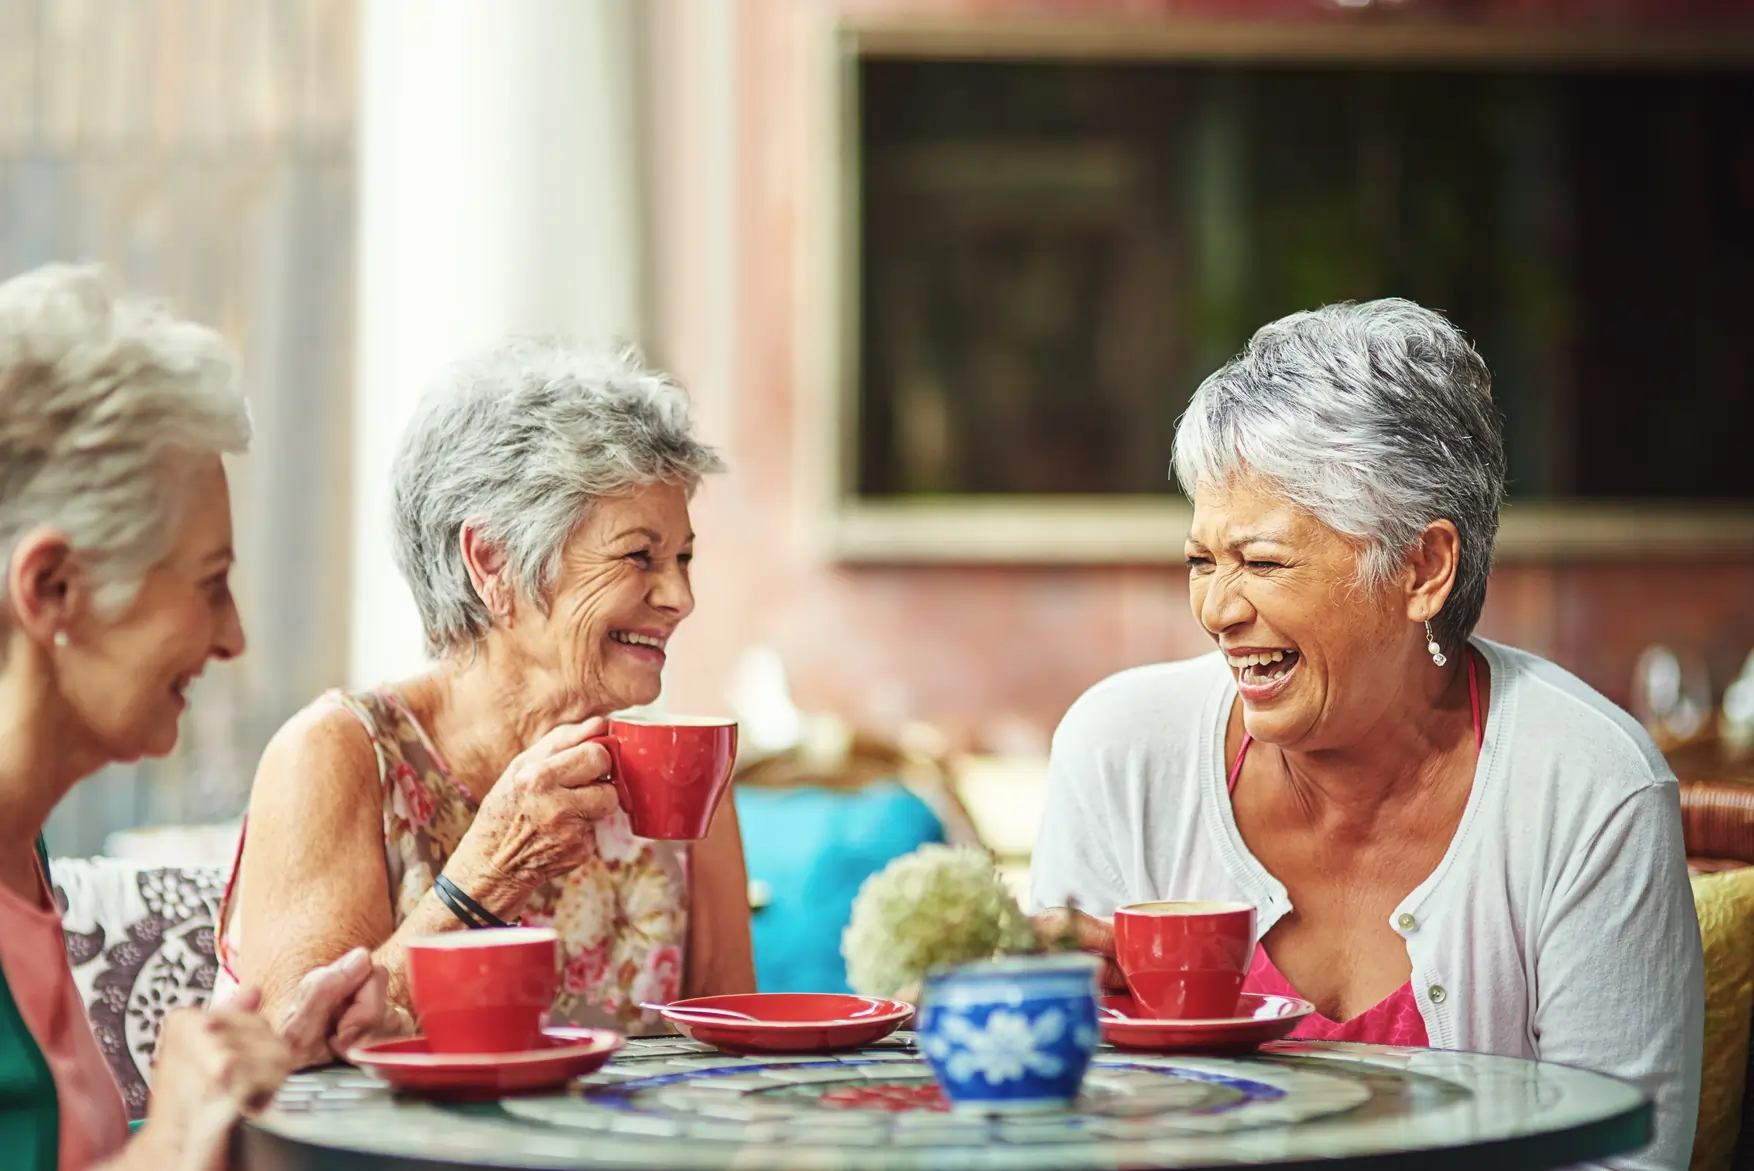 Elderly women enjoying lunch together.